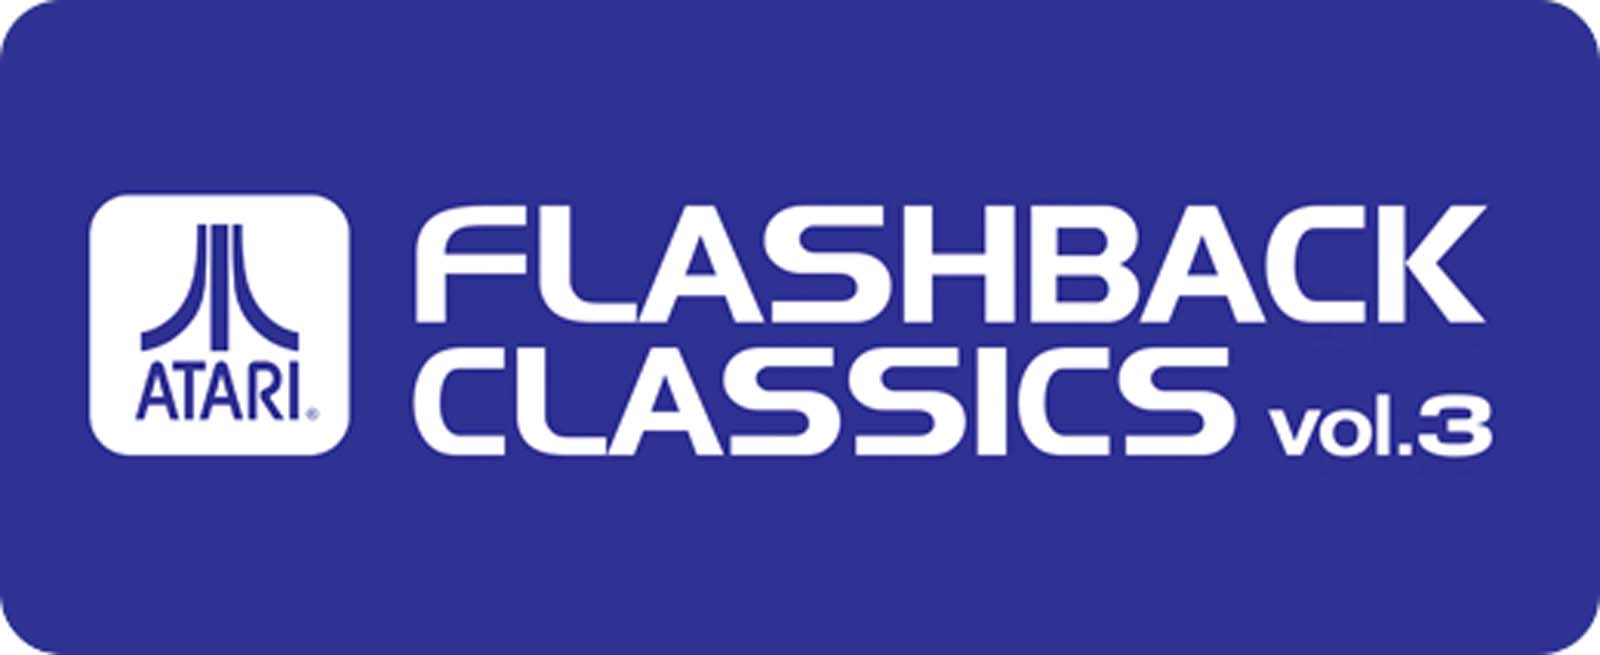 Atari Flashback Classics – Volume 3